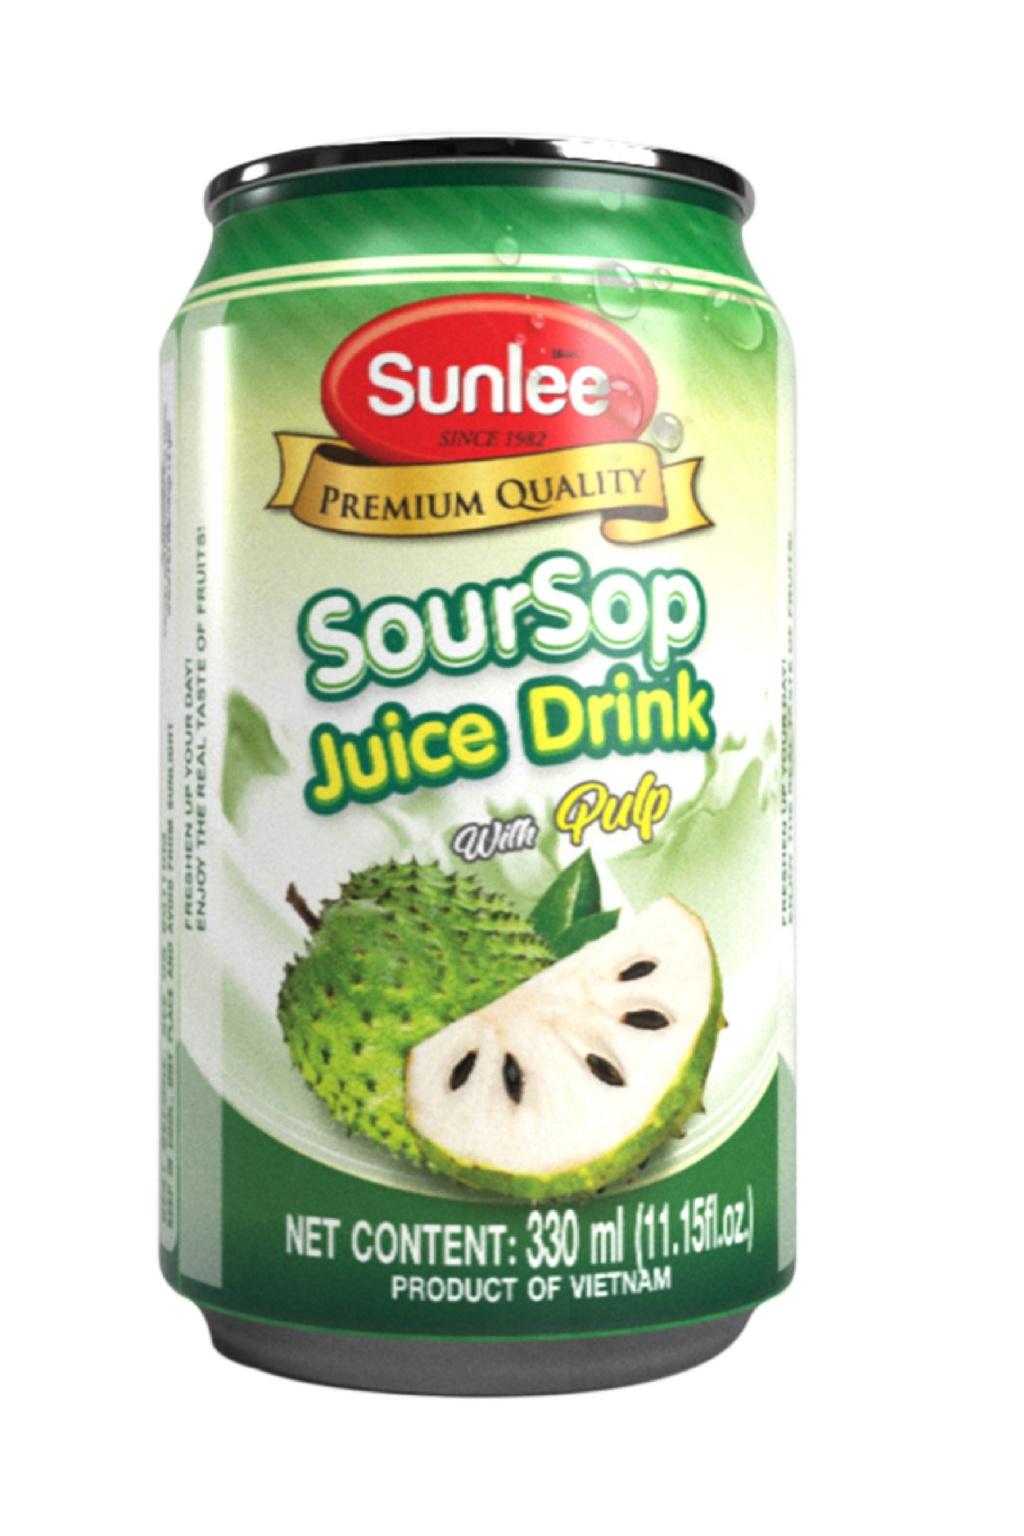 Soursop juice